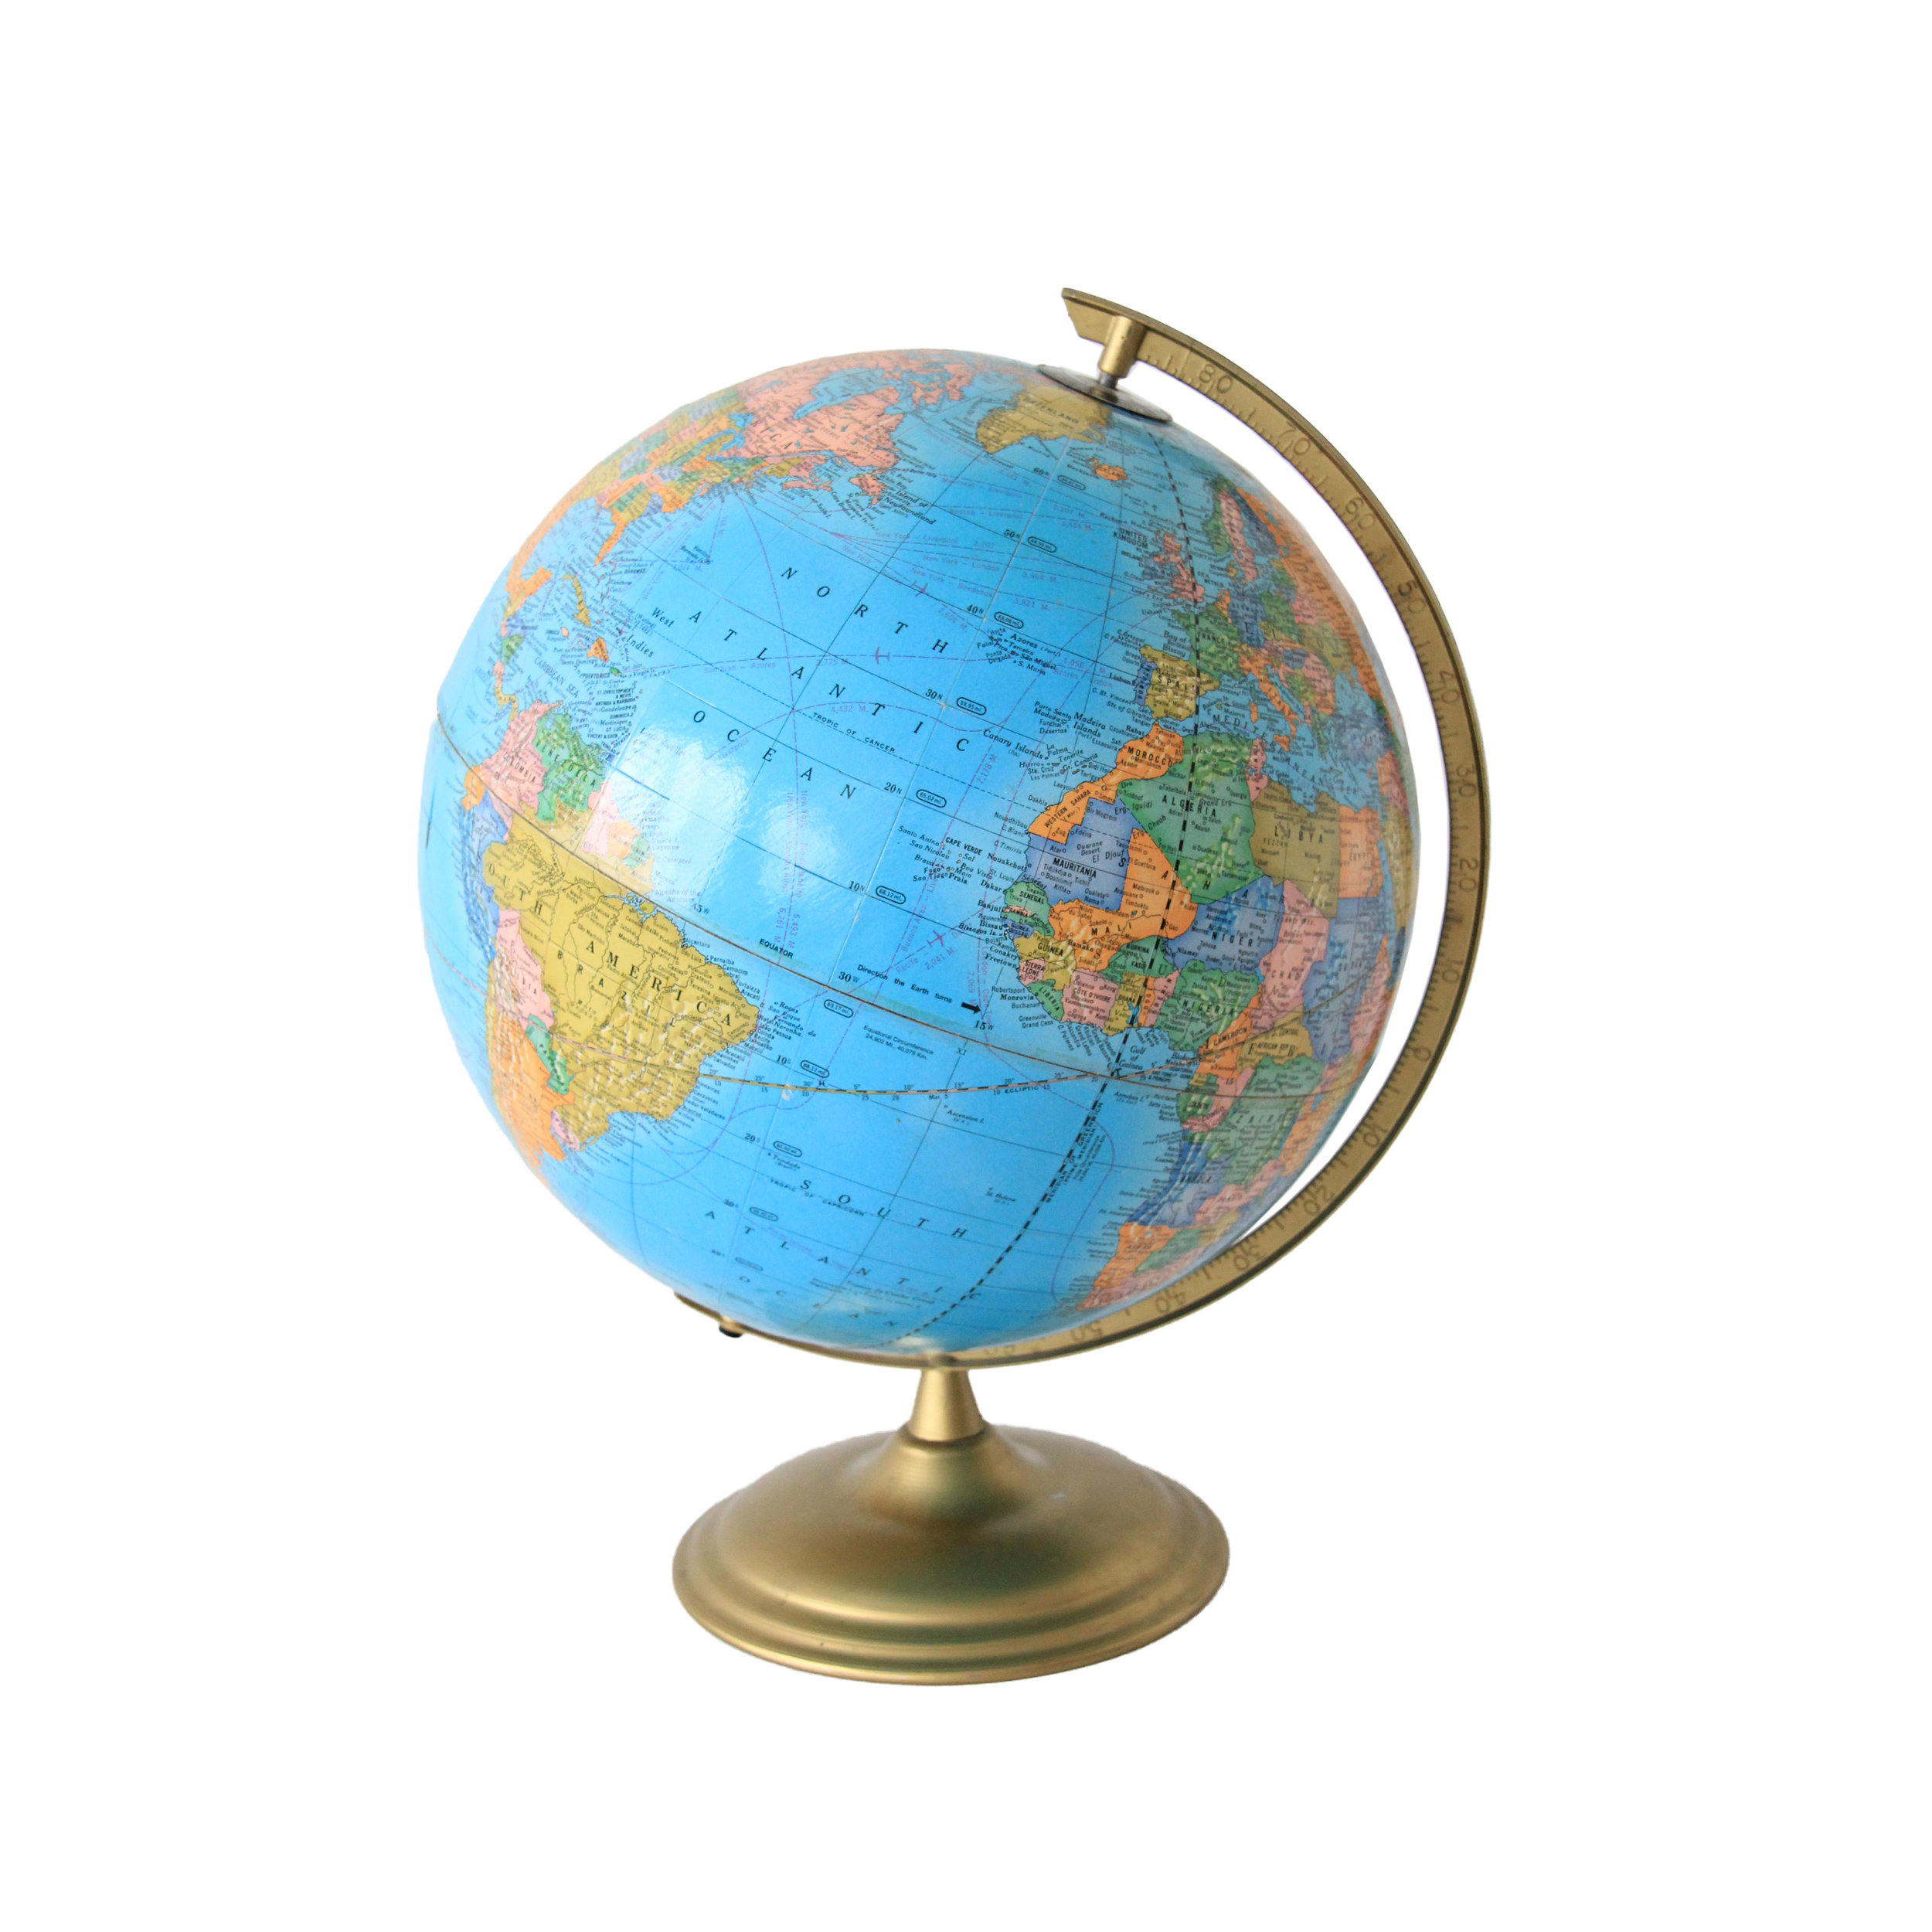 cram's imperial globe.jpg